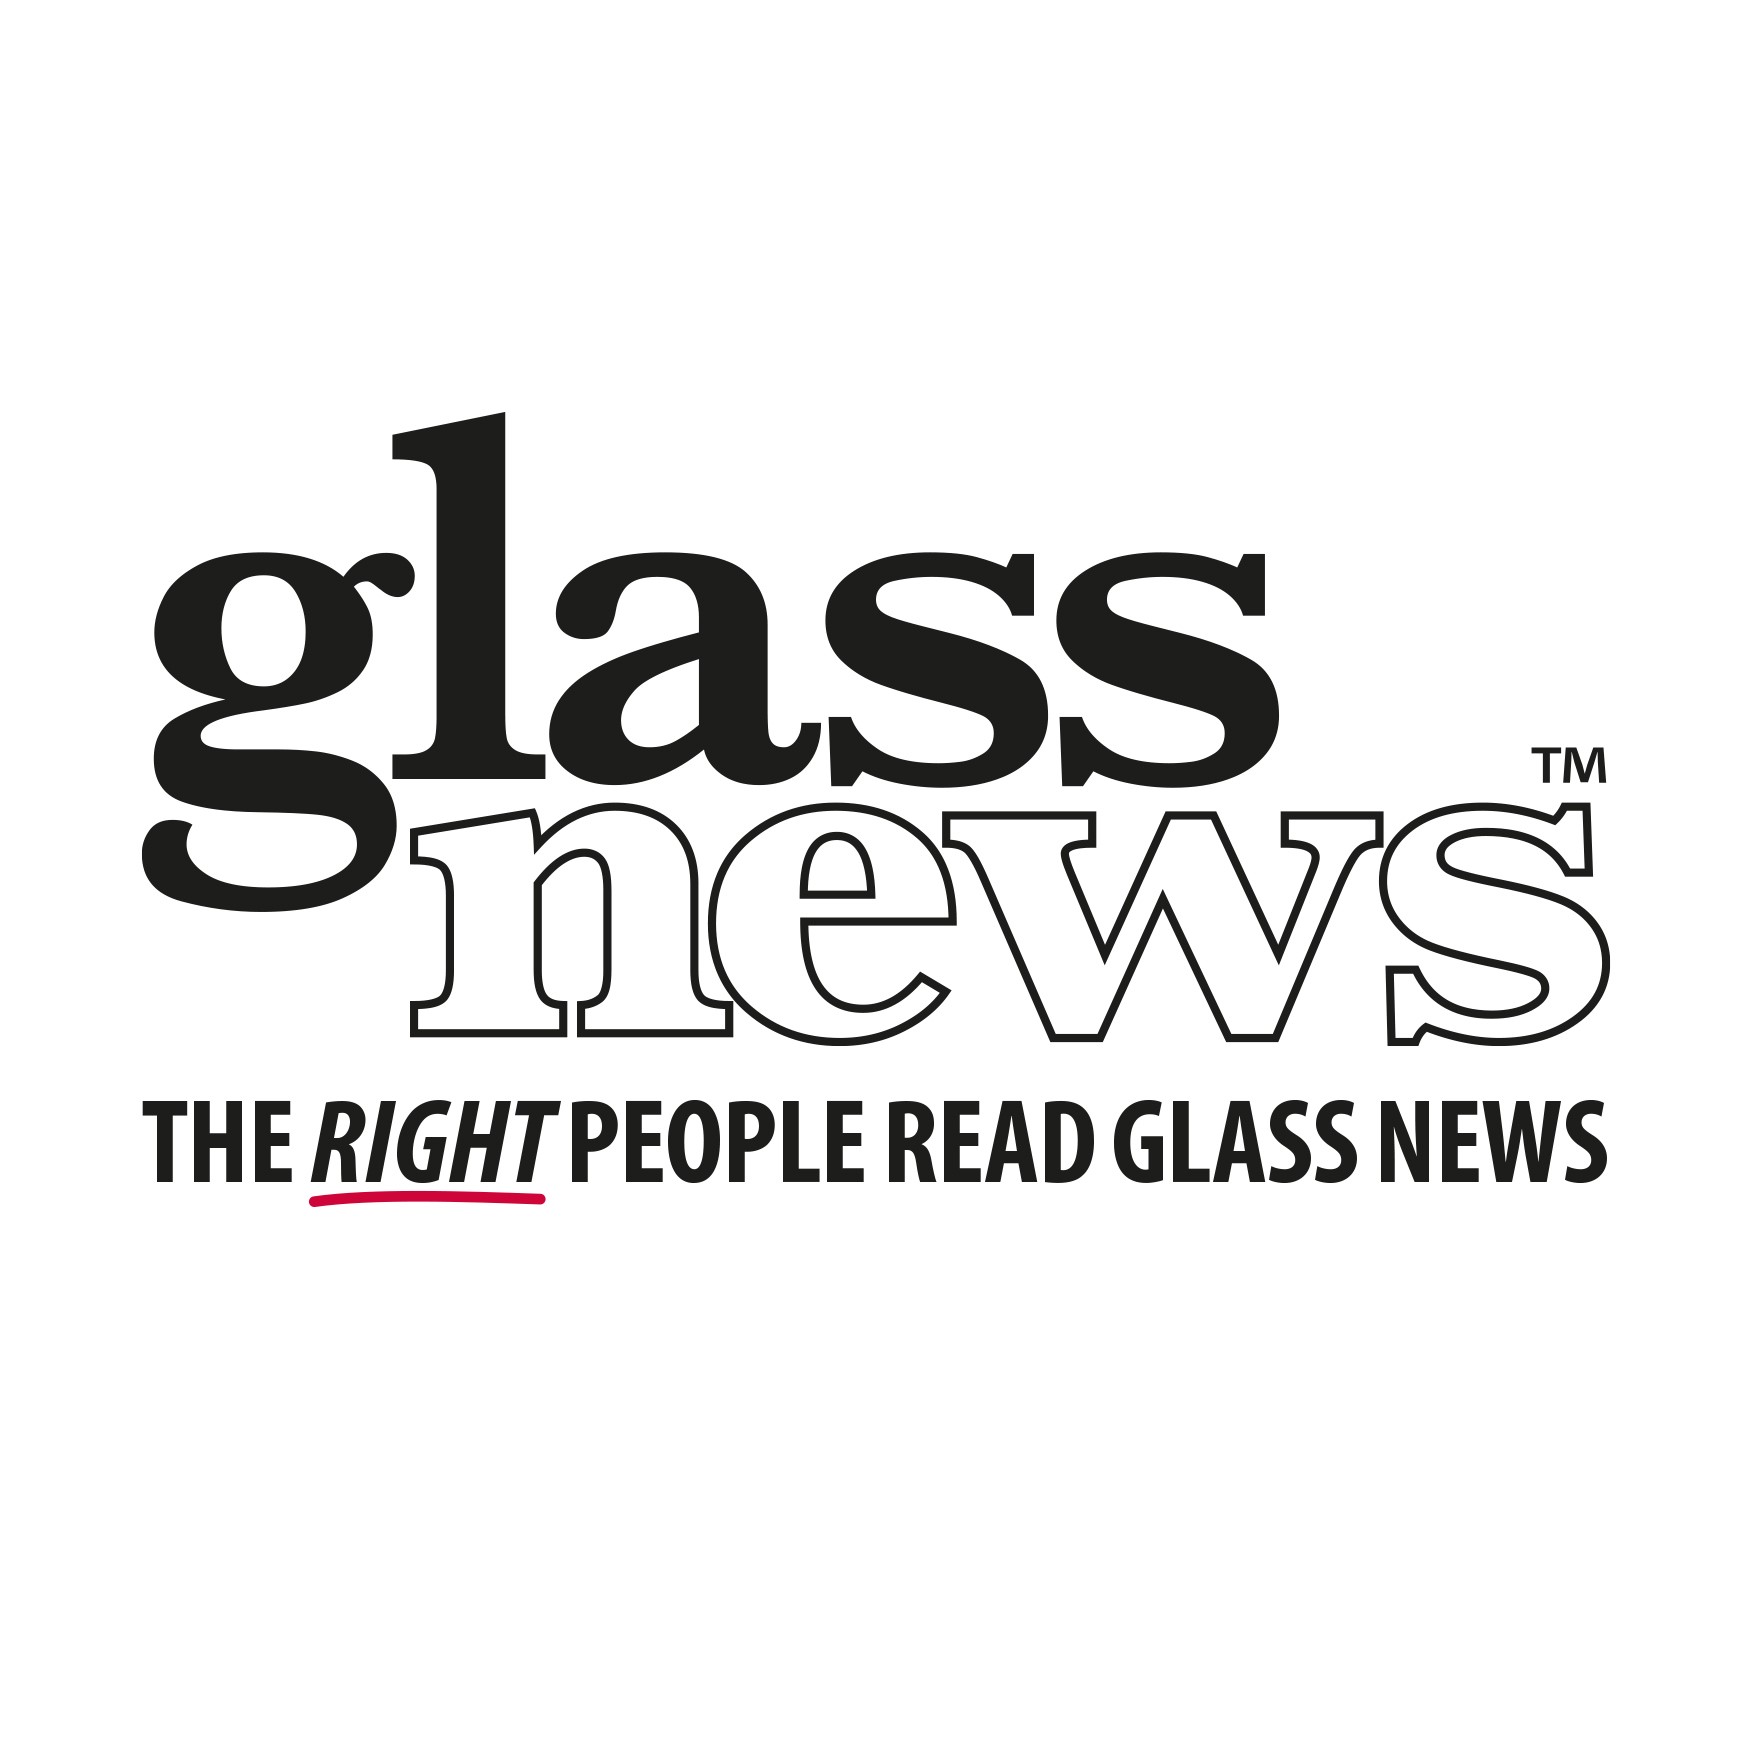 Glassnews